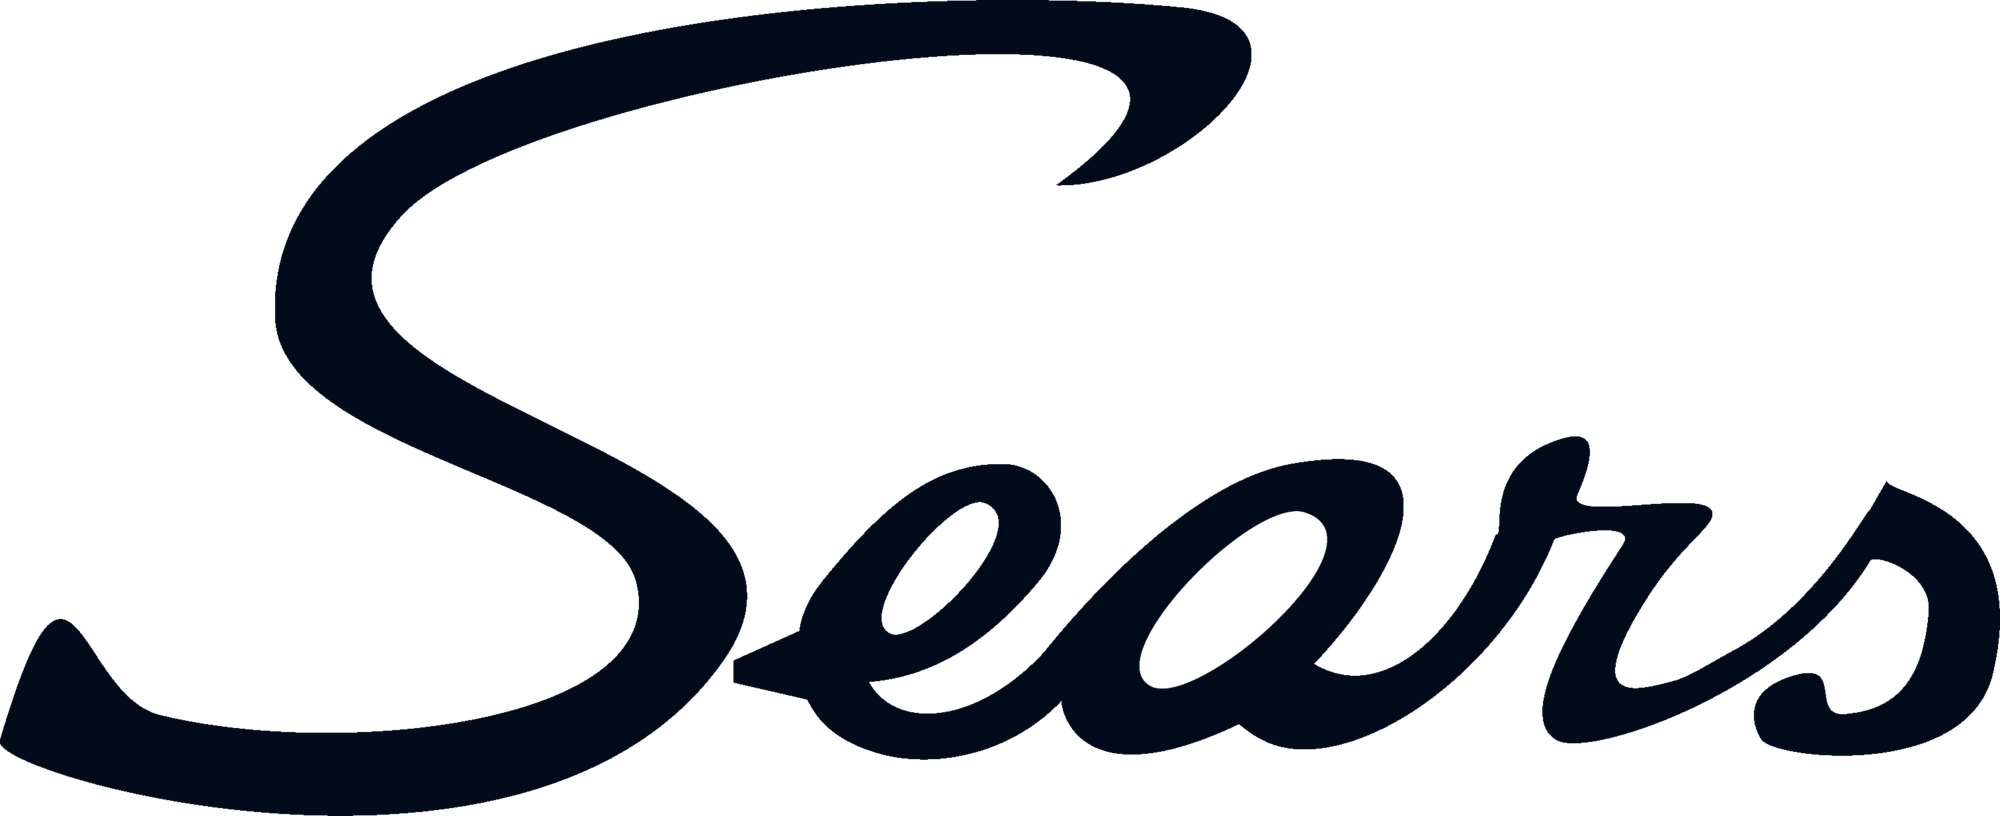 Sears.com Logo - Sears